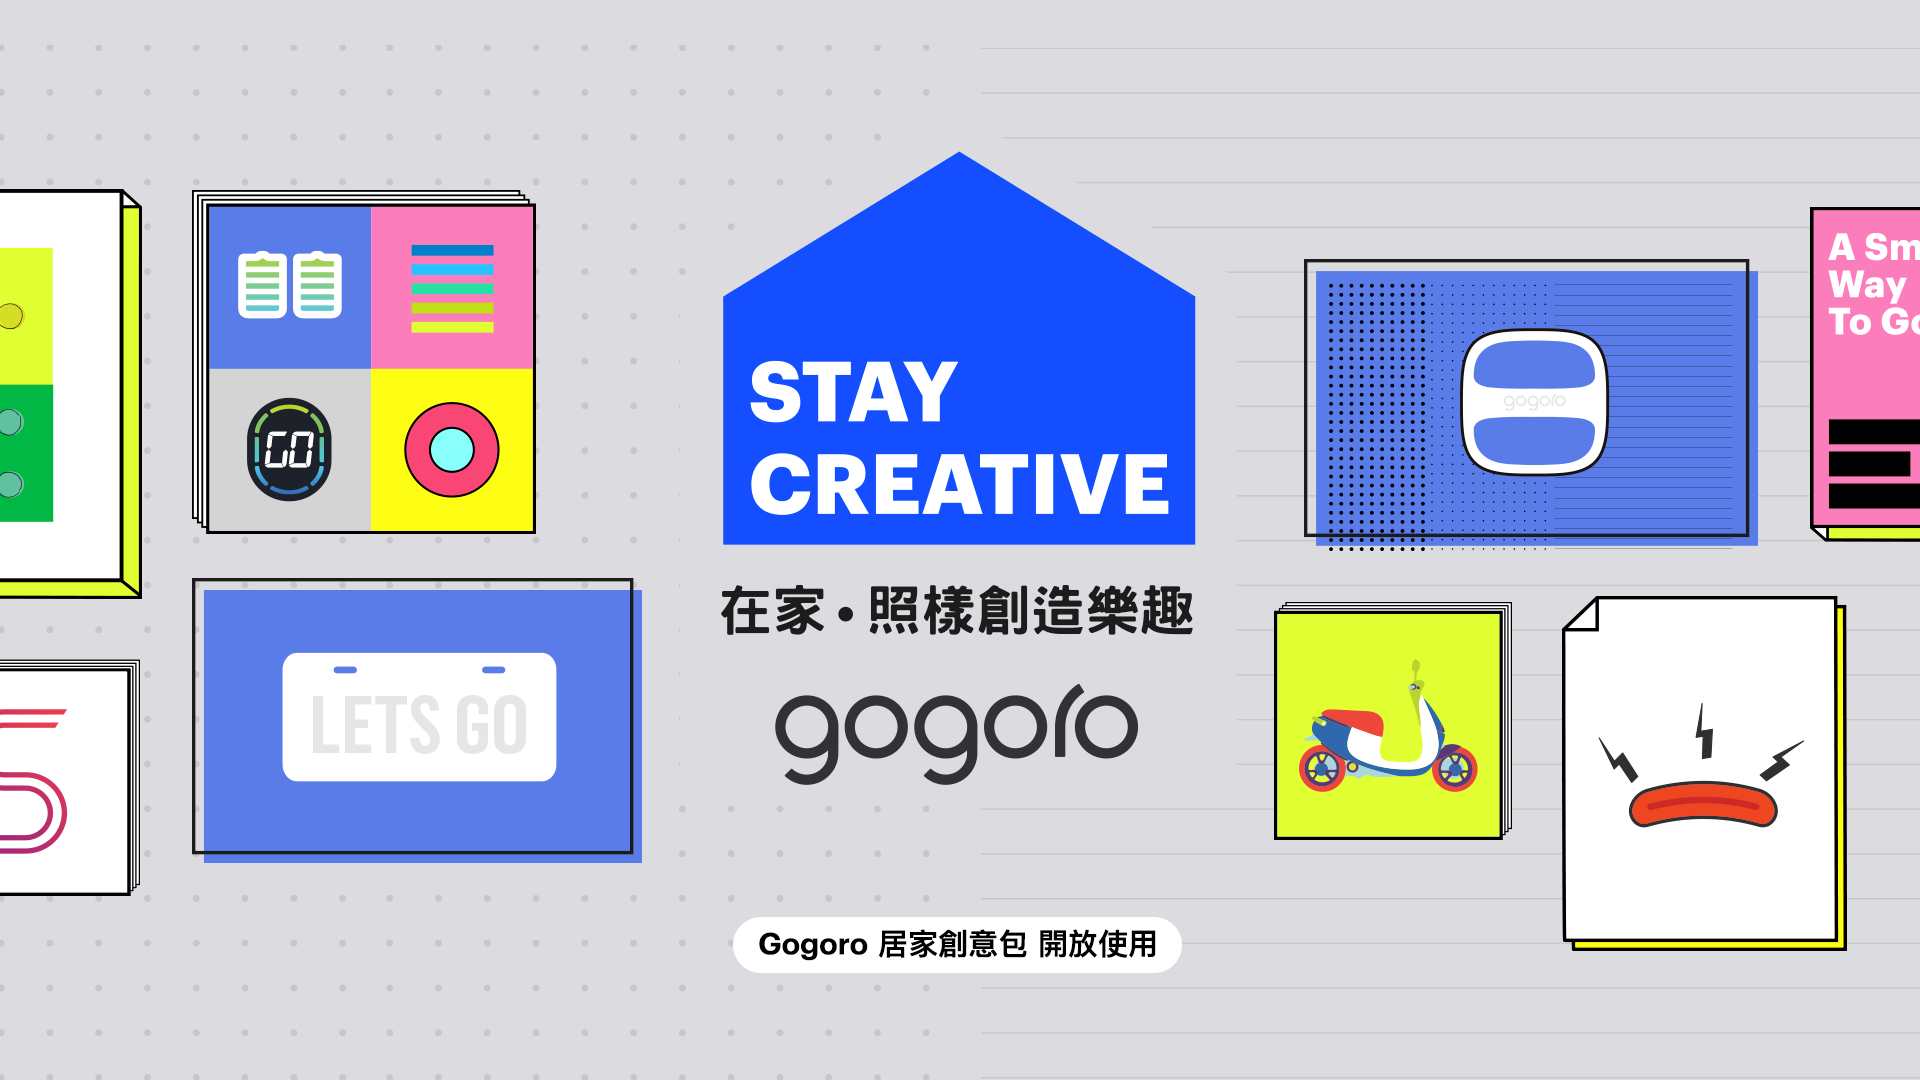 ▲ Gogoro 陪你在家抗疫 居家創意工具包免費開放下載